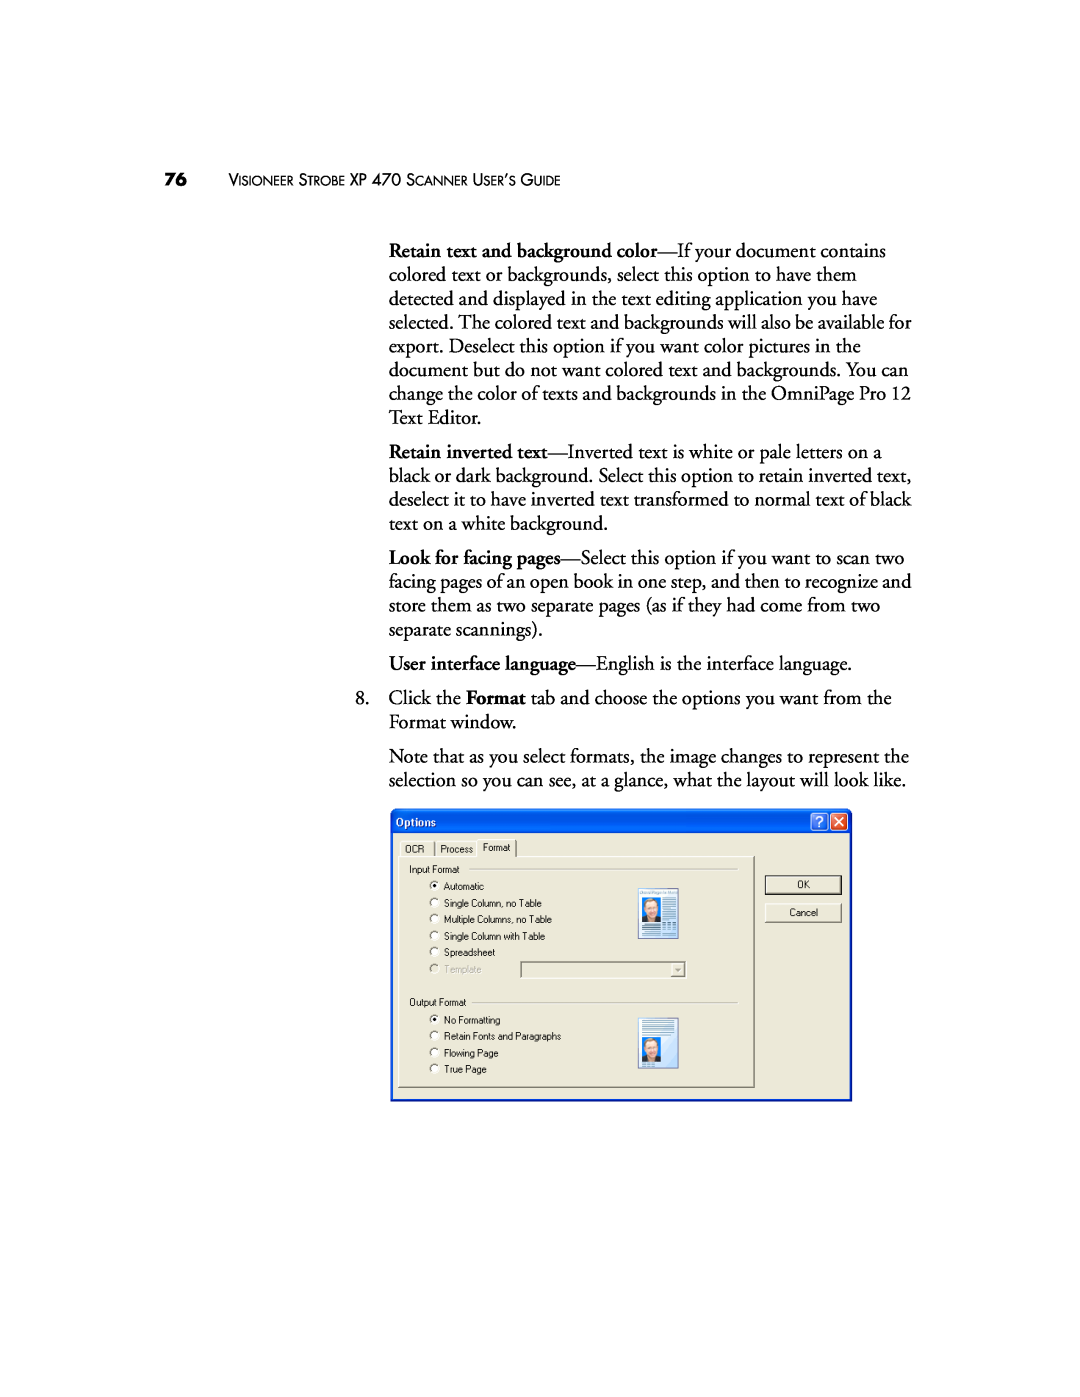 Visioneer XP 470 manual User interface language-English is the interface language 